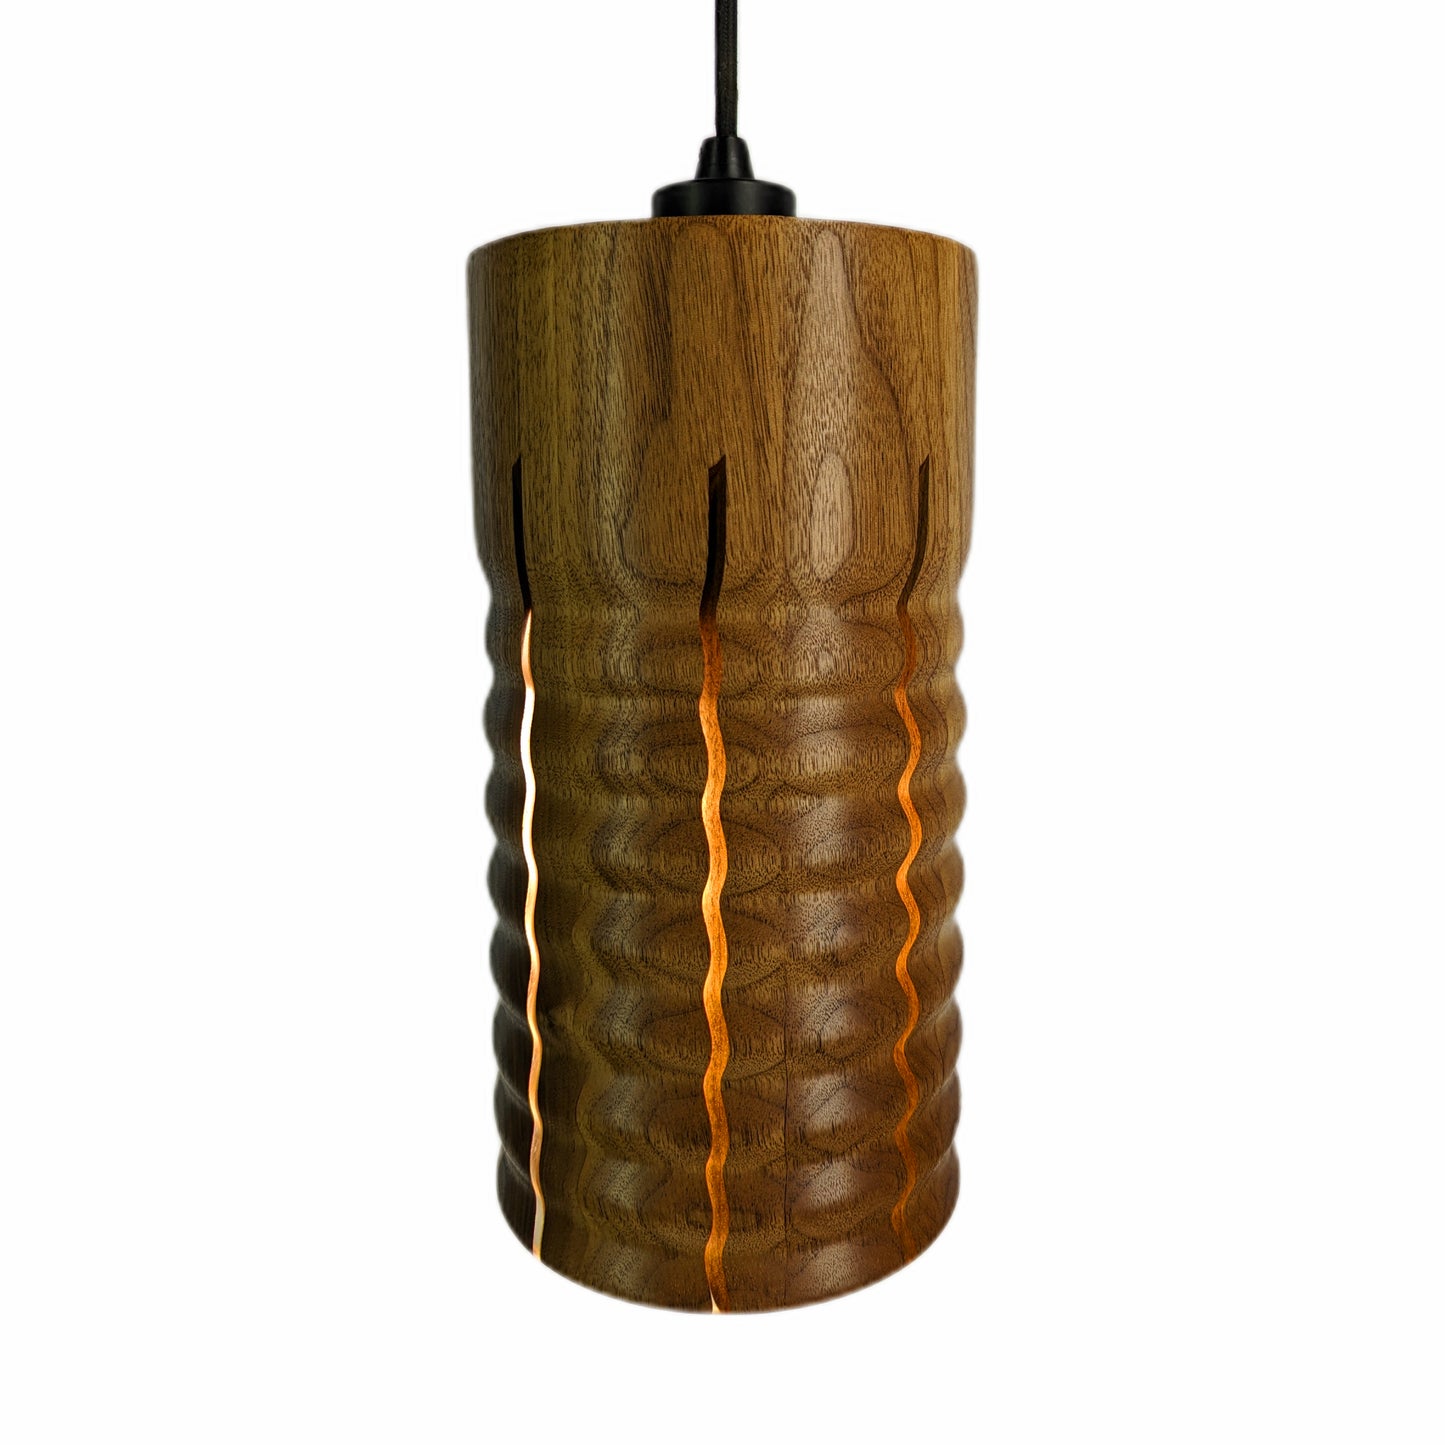 Strake Studio Dello Pendant Lamp made from Walnut wood.